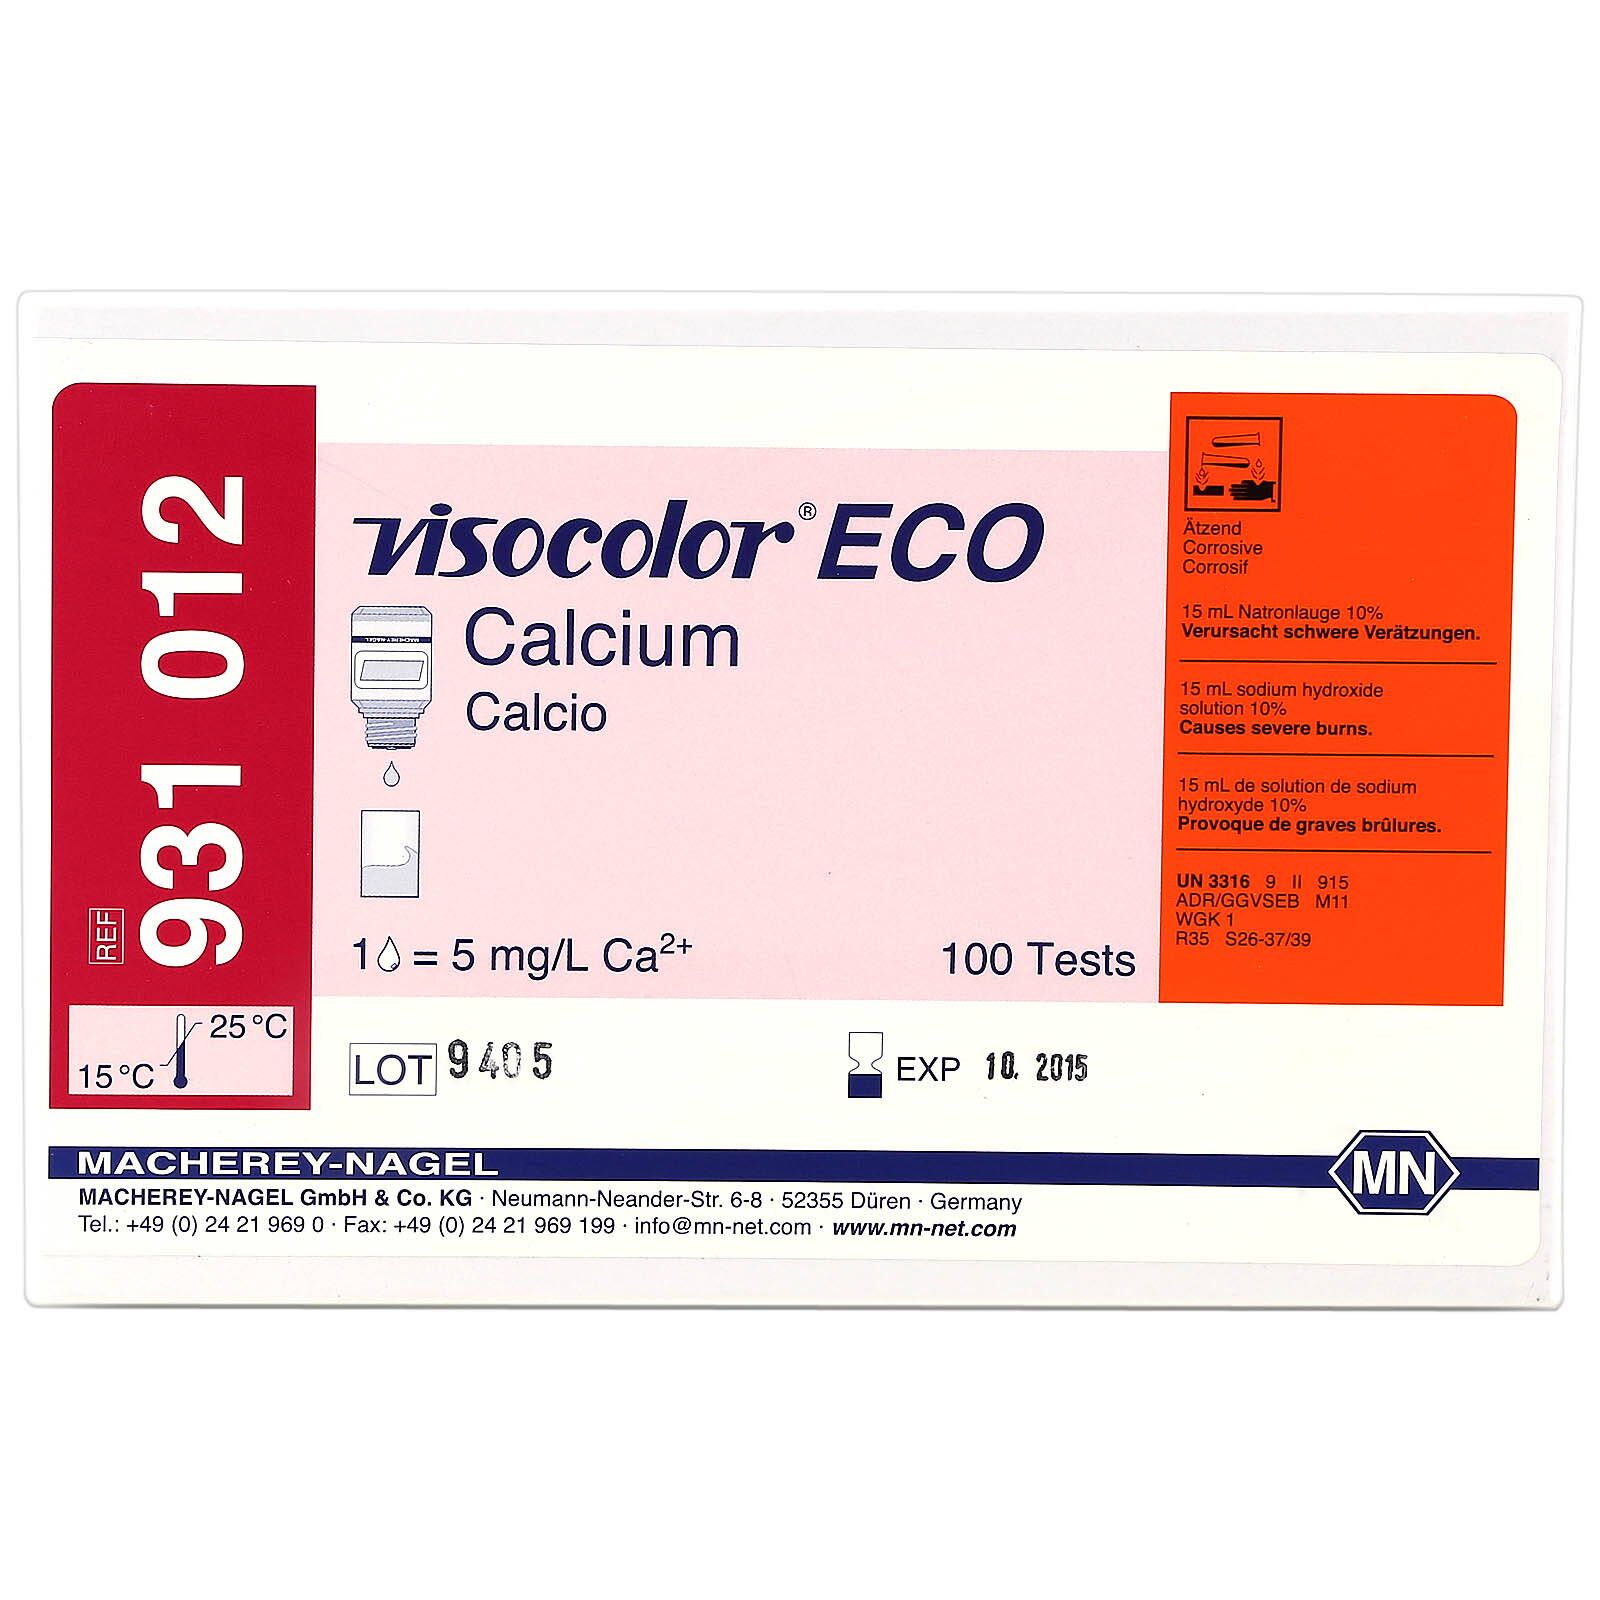 Macherey-Nagel - Visocolor ECO - Calcium - Test